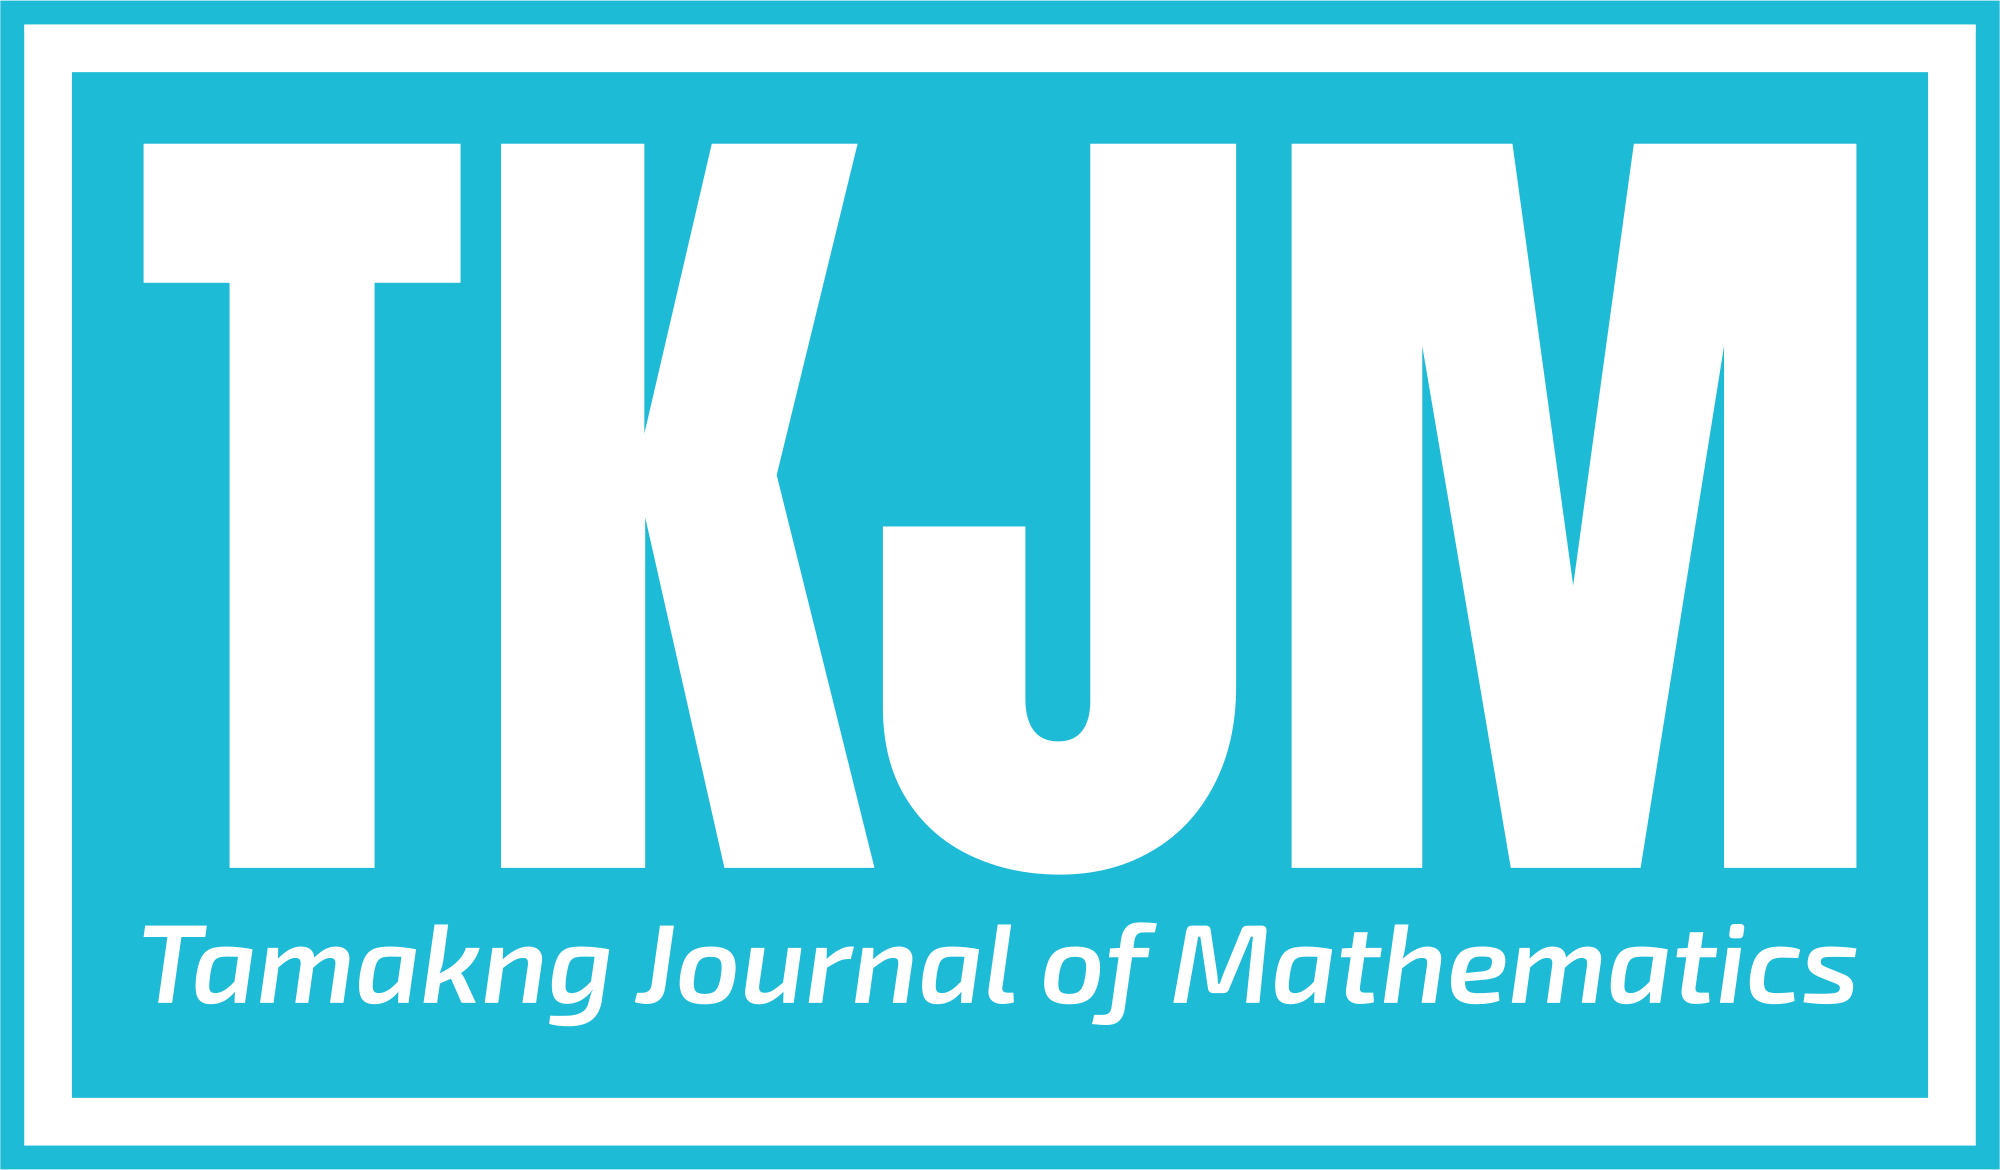 Welcome to Tamkang Journal of Matheatics